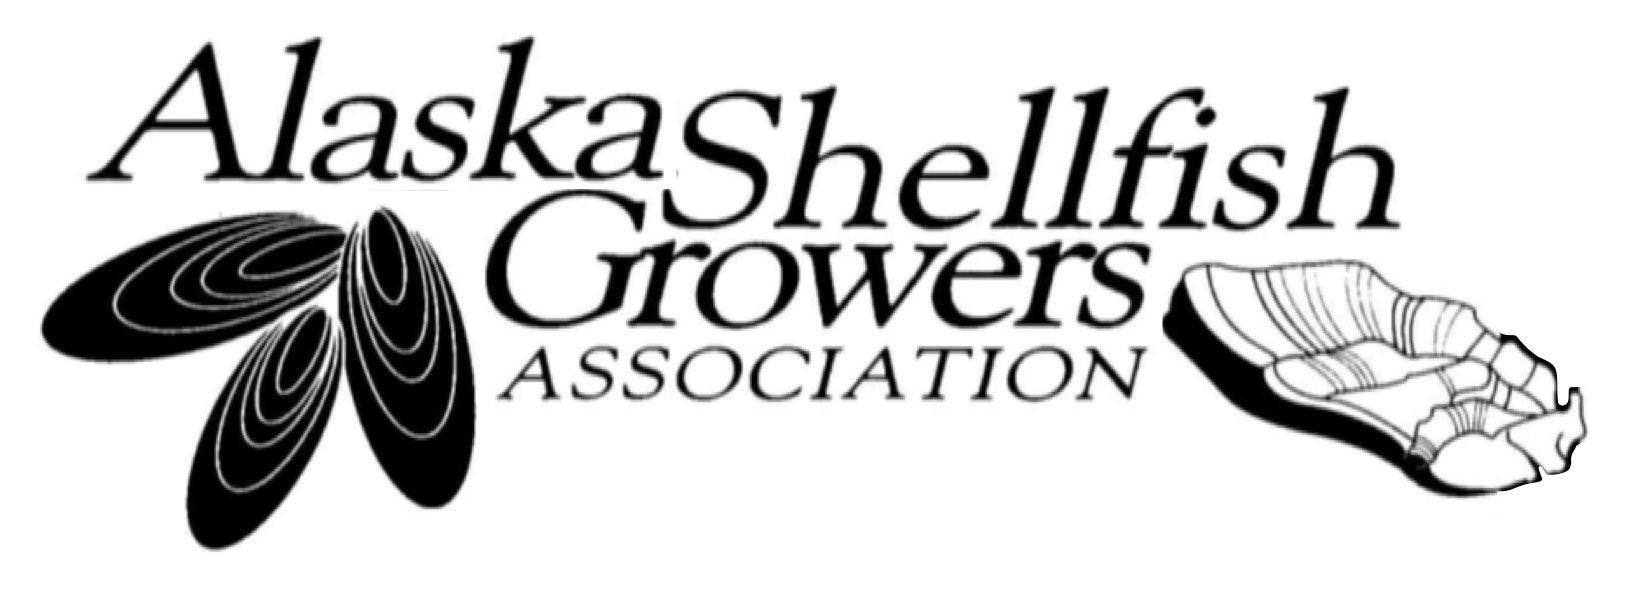 Alaska Shellfish Growers Association